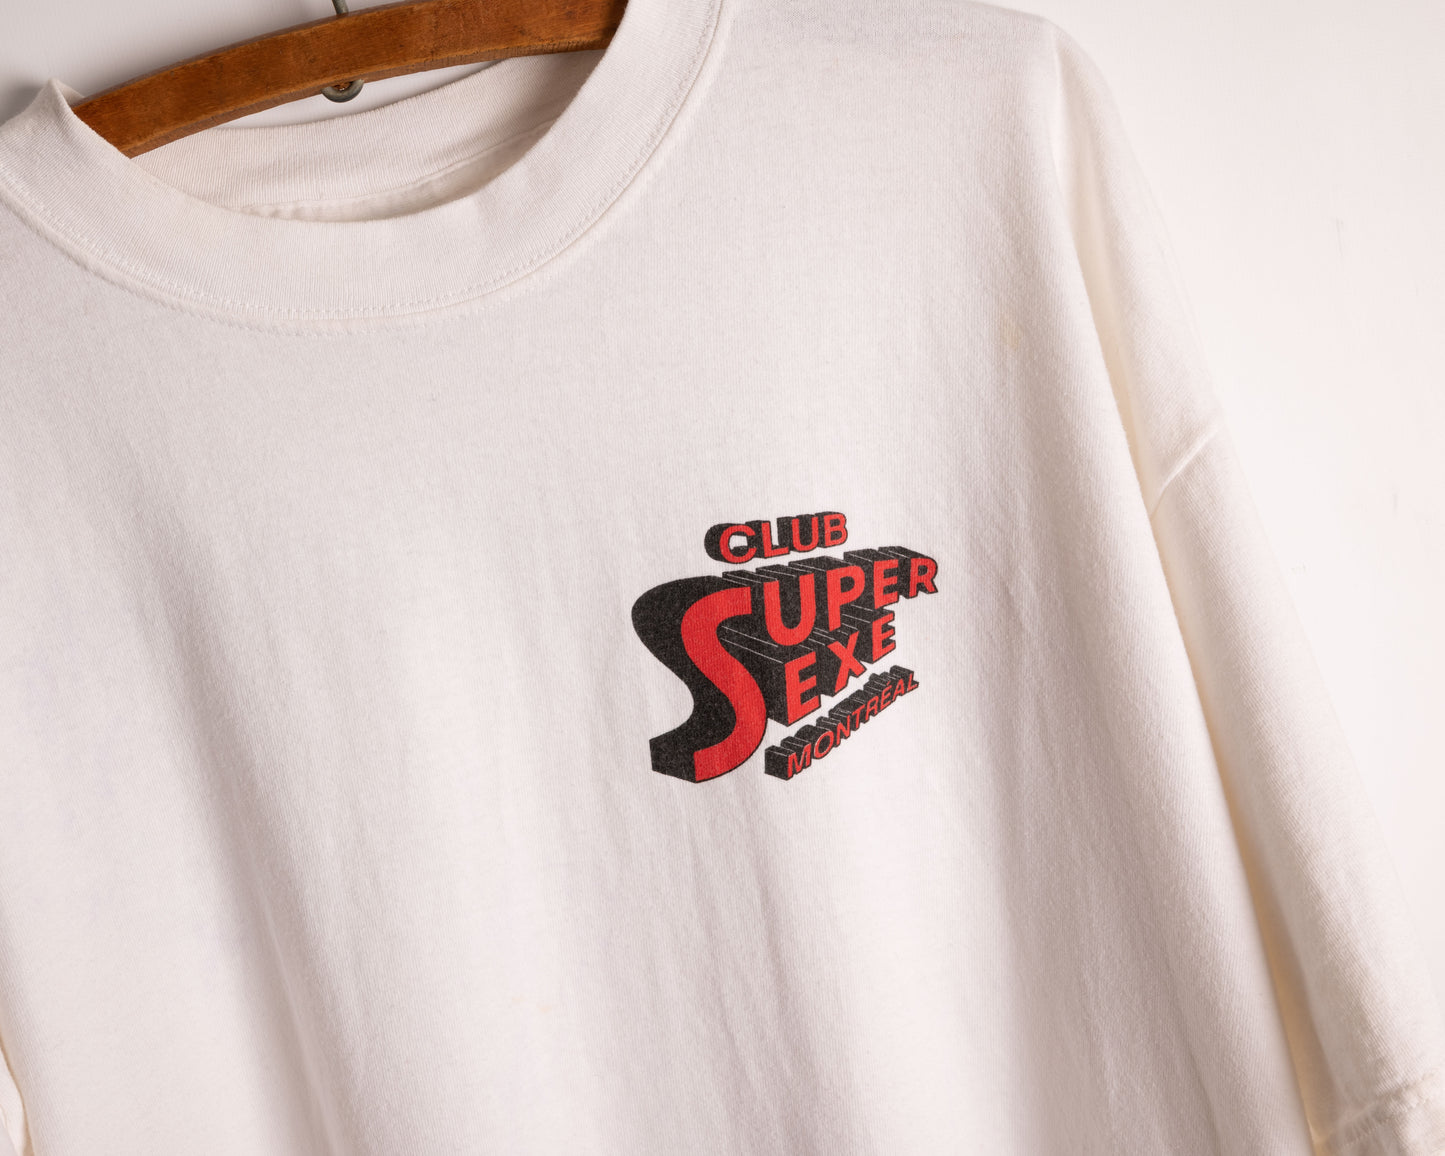 Club Super Sexe t-shirt